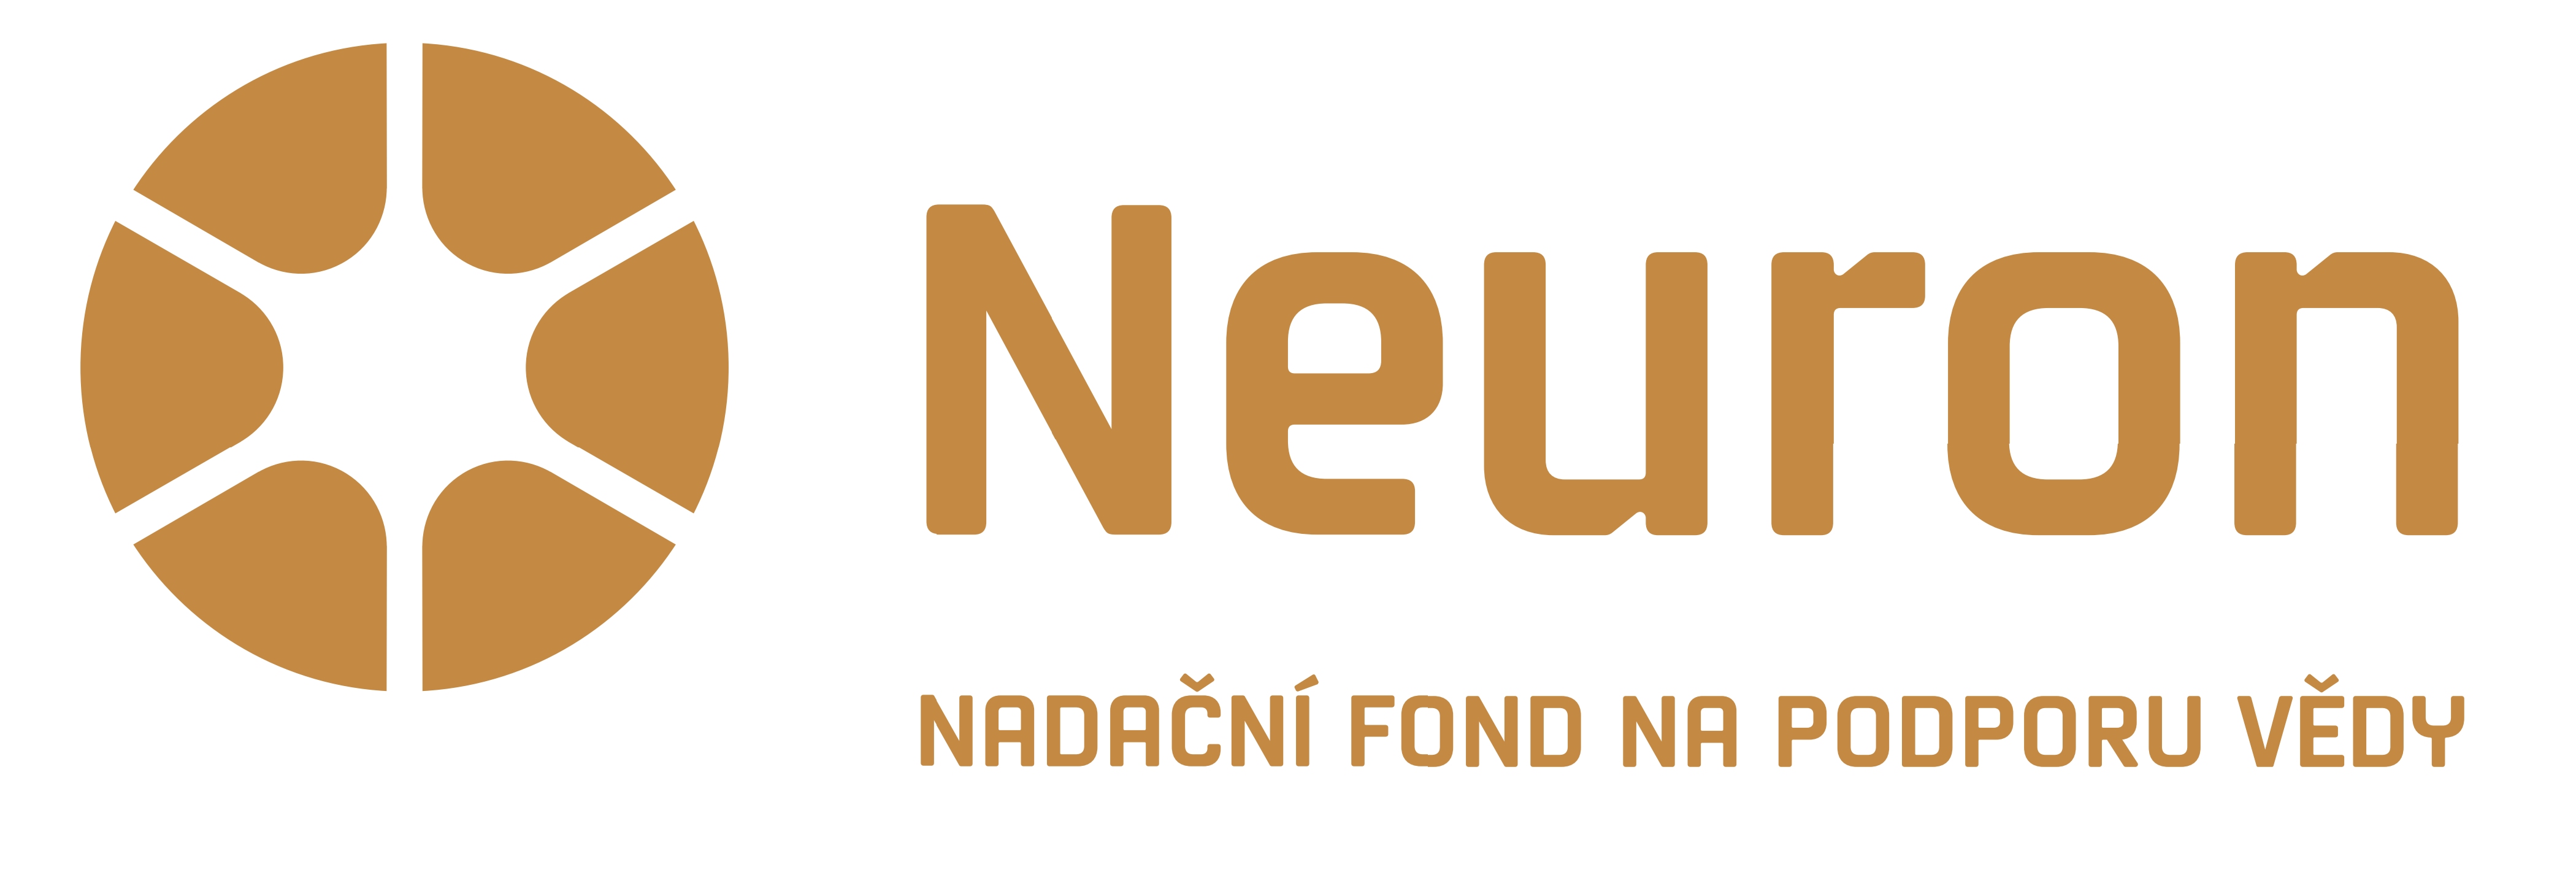 neuron-logo.jpg